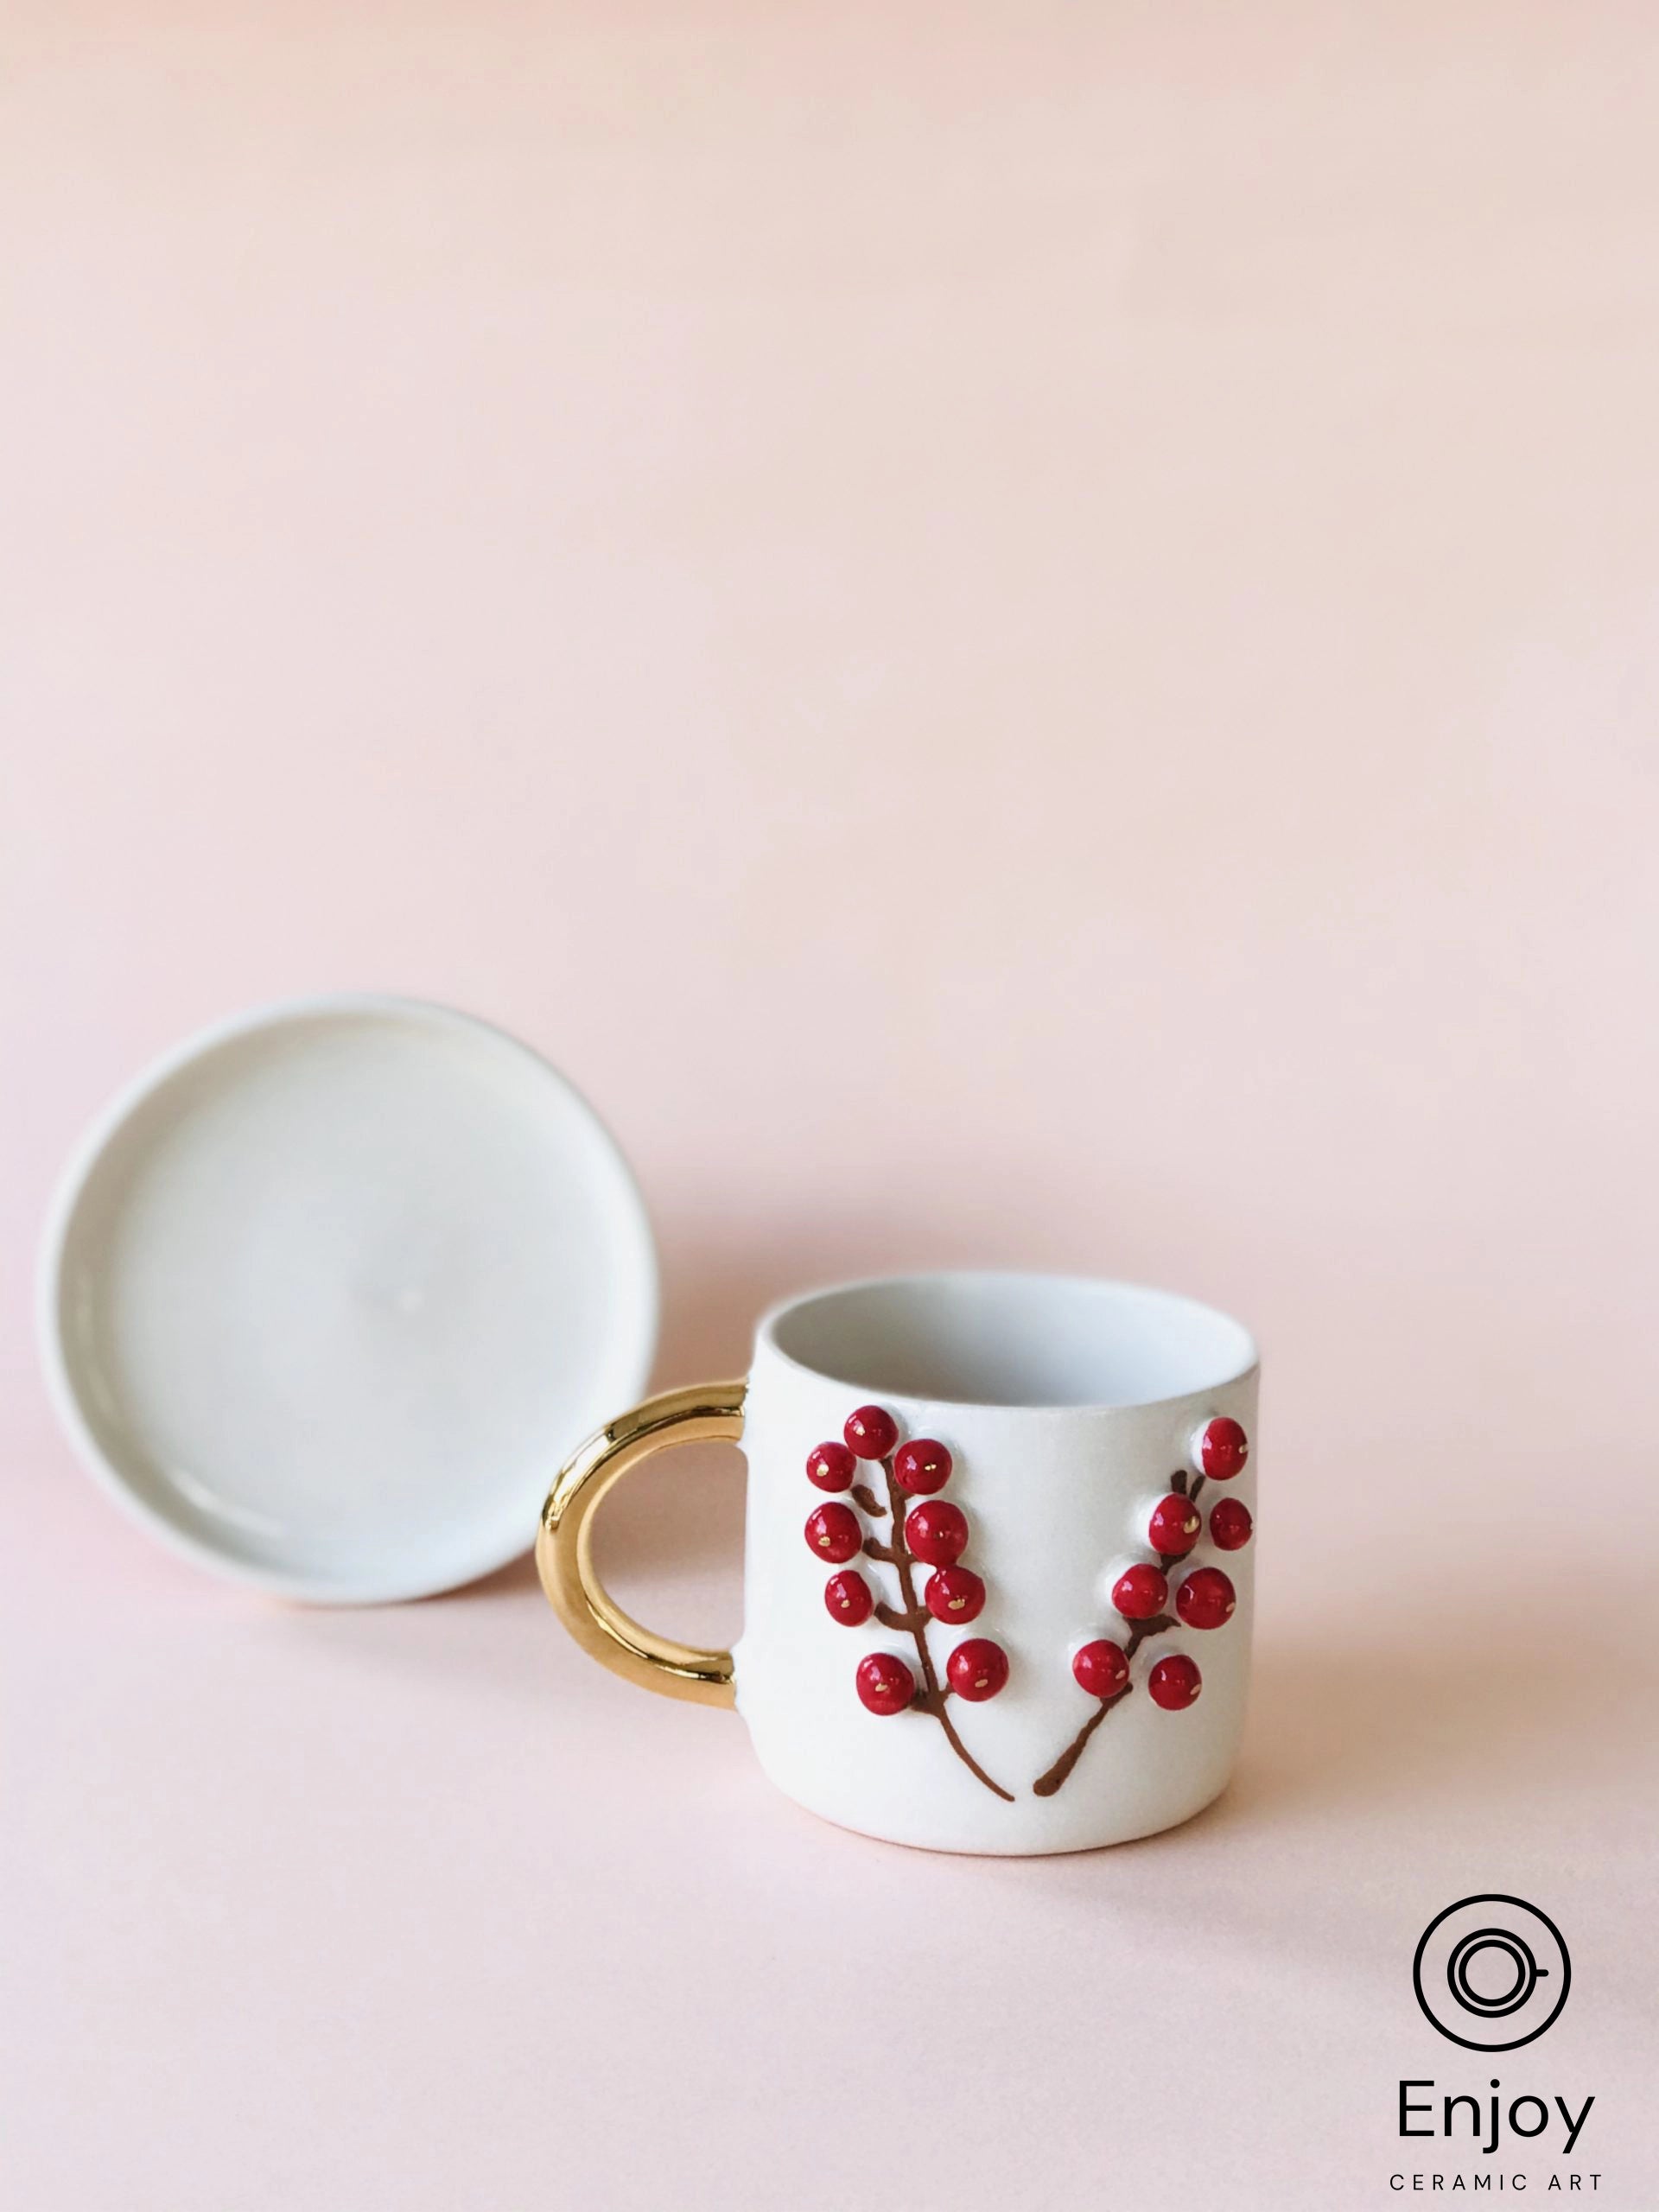 Akiletus Handmade Ceramic Espresso Cup with Saucer - Winterberry Design & Italian Gold Handle, 5.4 oz